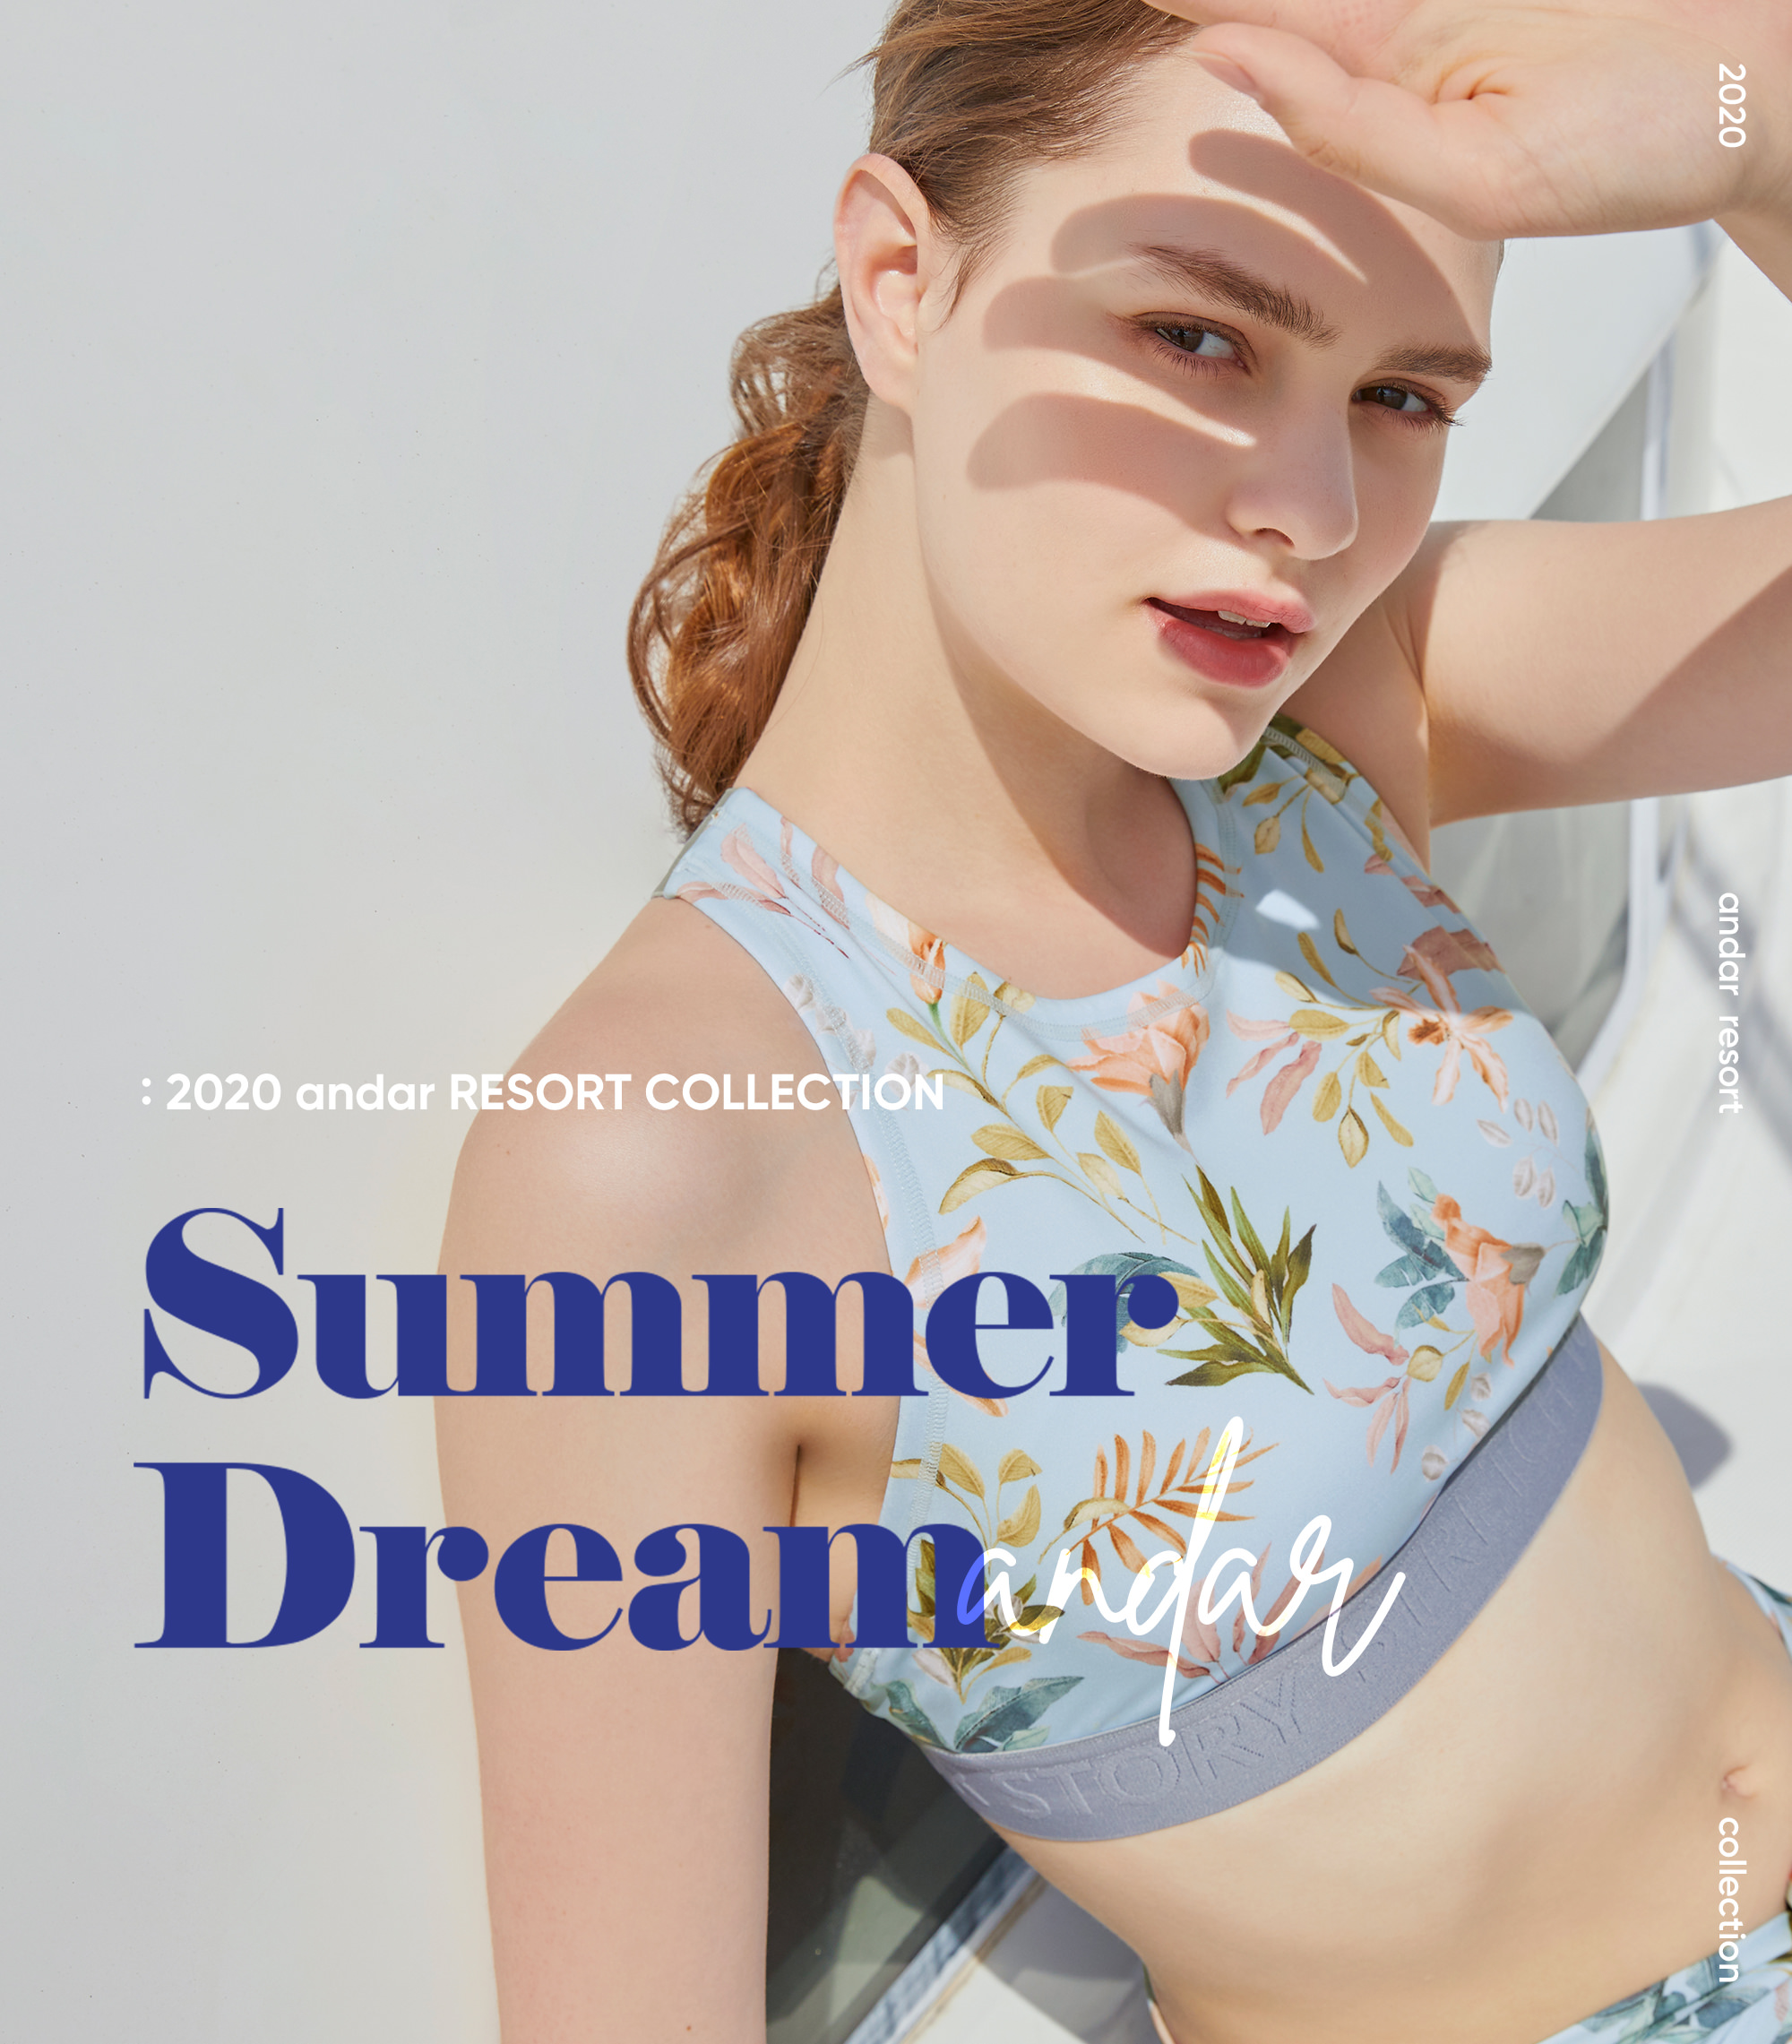 2020 andar RESORT COLLECTION - Summer Dream